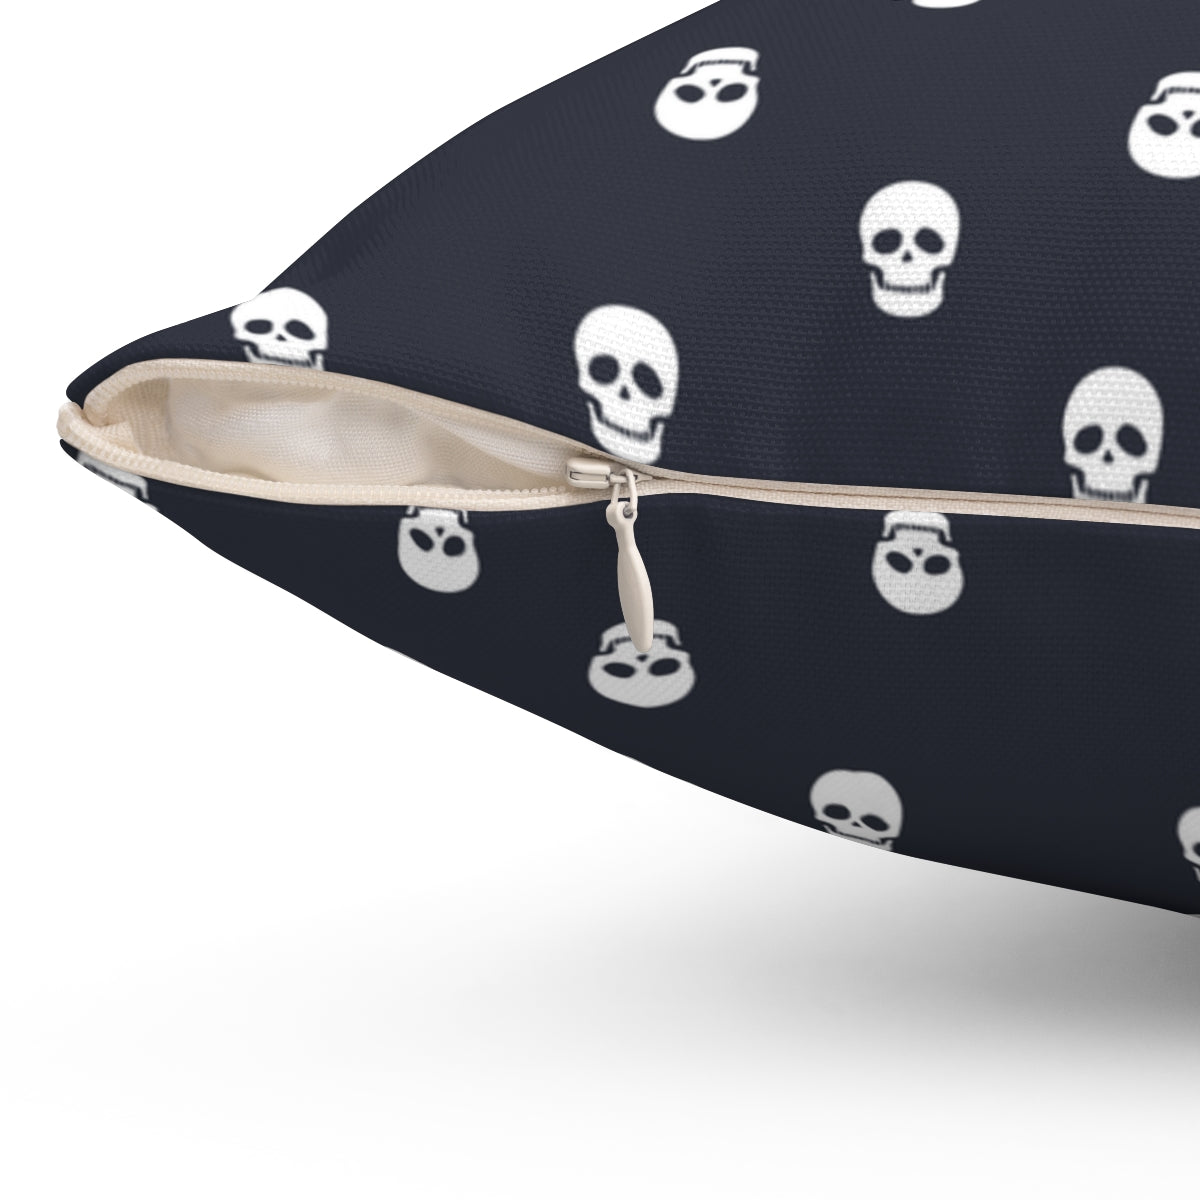 Scary Skulls Pillow Cover / Halloween / Dark Gray